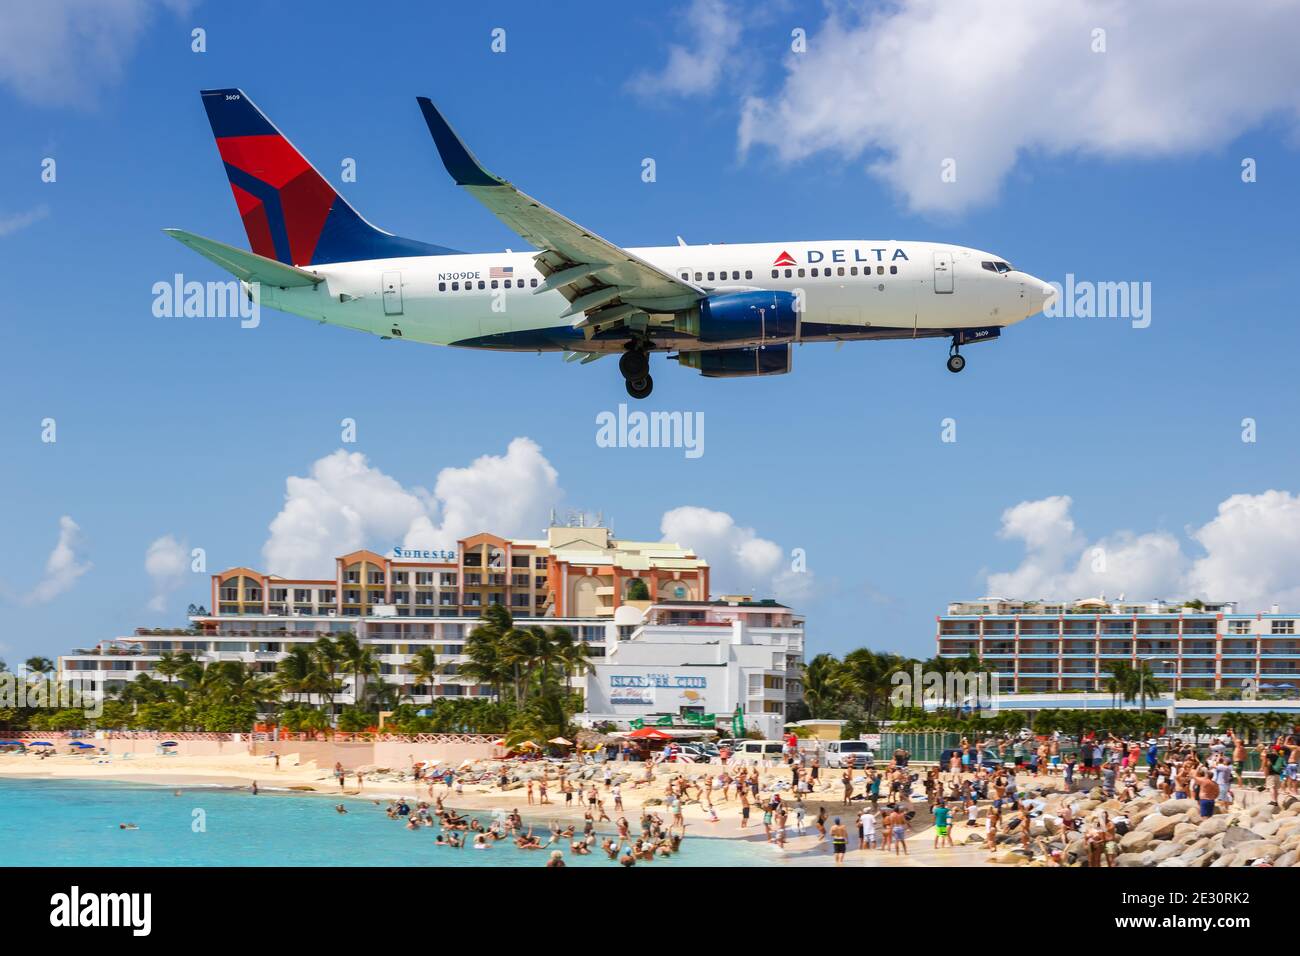 Sint Maarten, Netherlands Antilles - September 15, 2016: Delta Air Lines Boeing 737-700 airplane at Sint Maarten Airport (SXM) in the Caribbean. Stock Photo